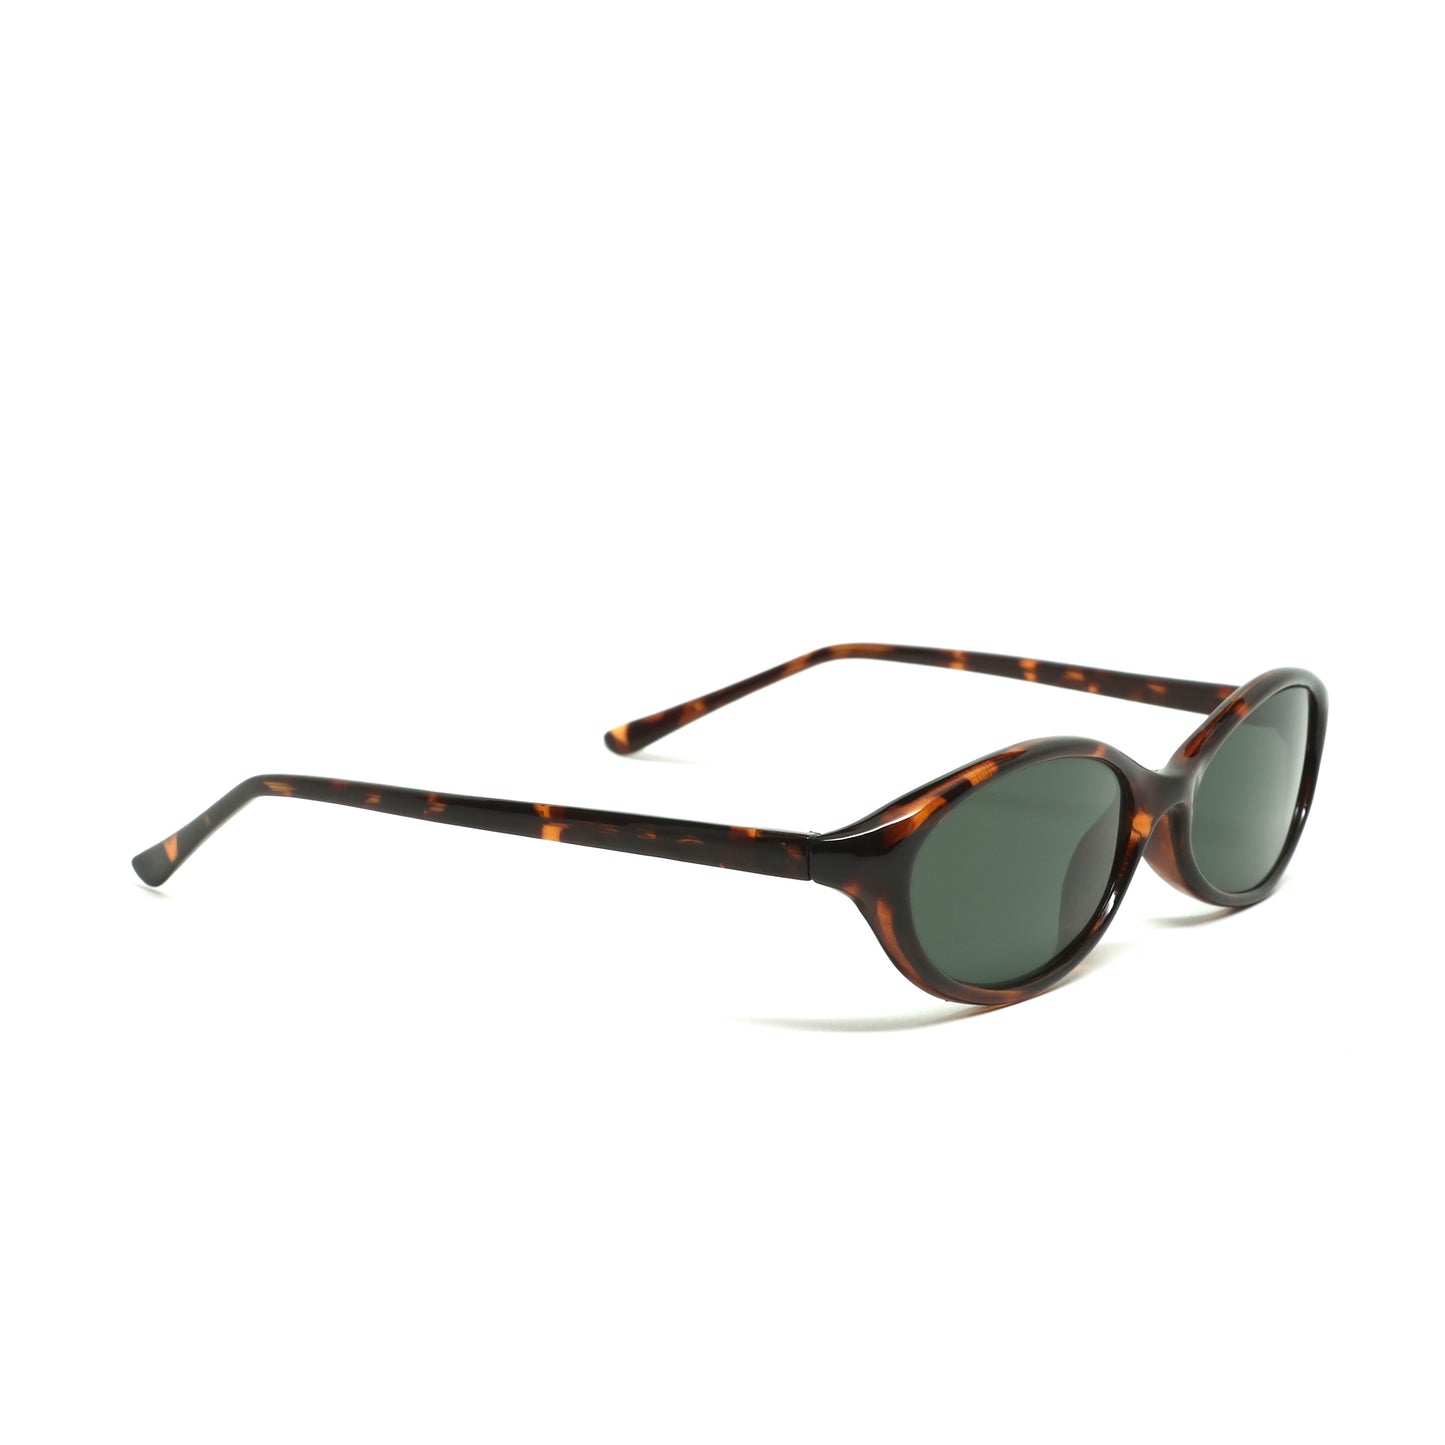 //Style 14// Vintage Late 90s Oval Frame Sunglasses - Tortoise